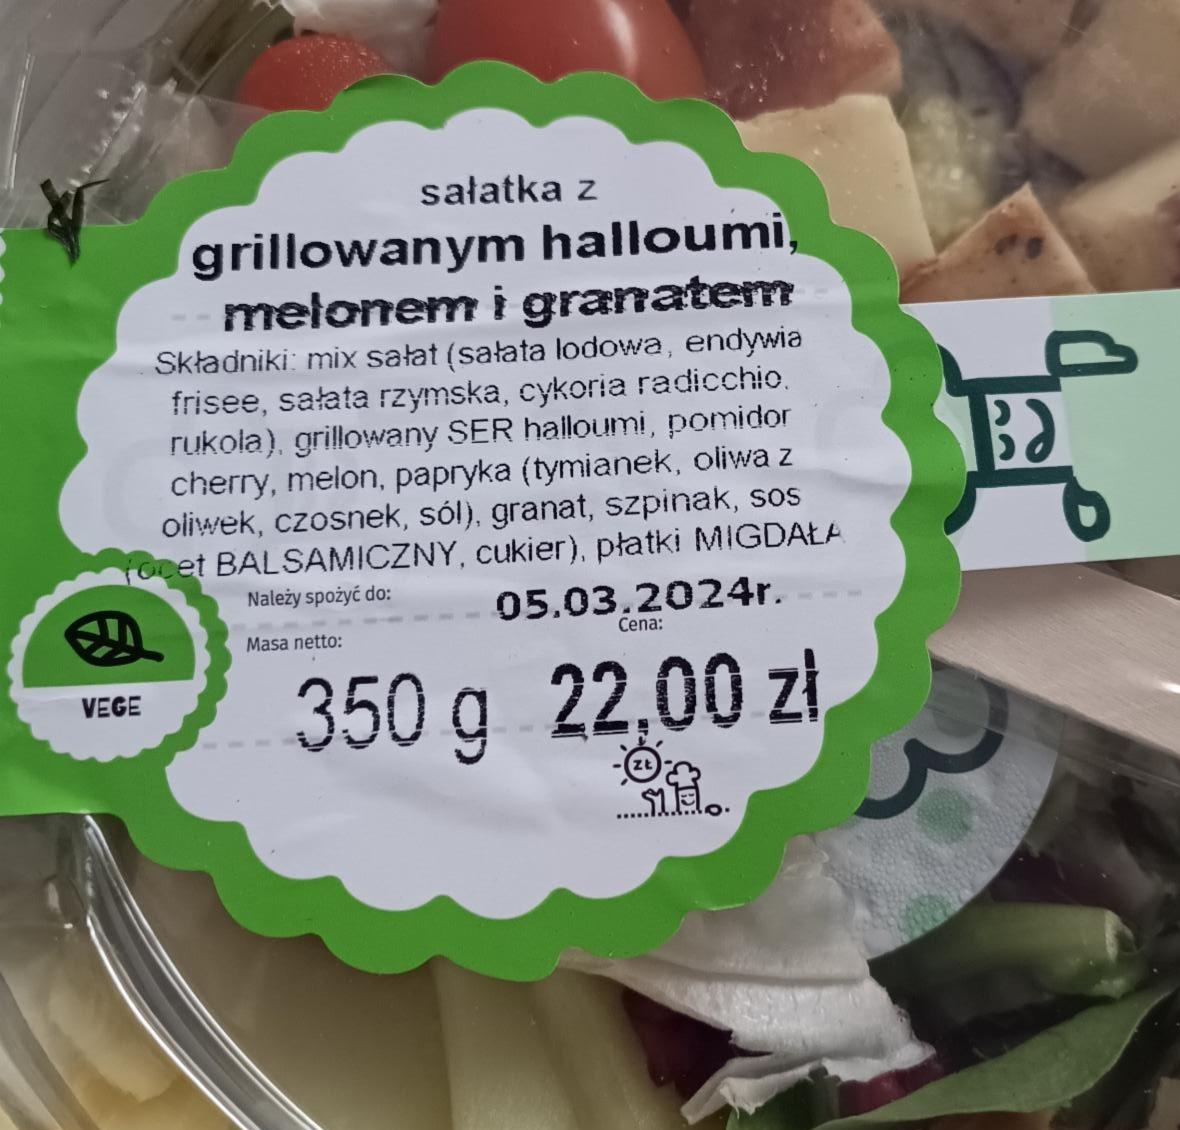 Фото - Salatka z grillowanym halloumi melonem i granatem Slimak